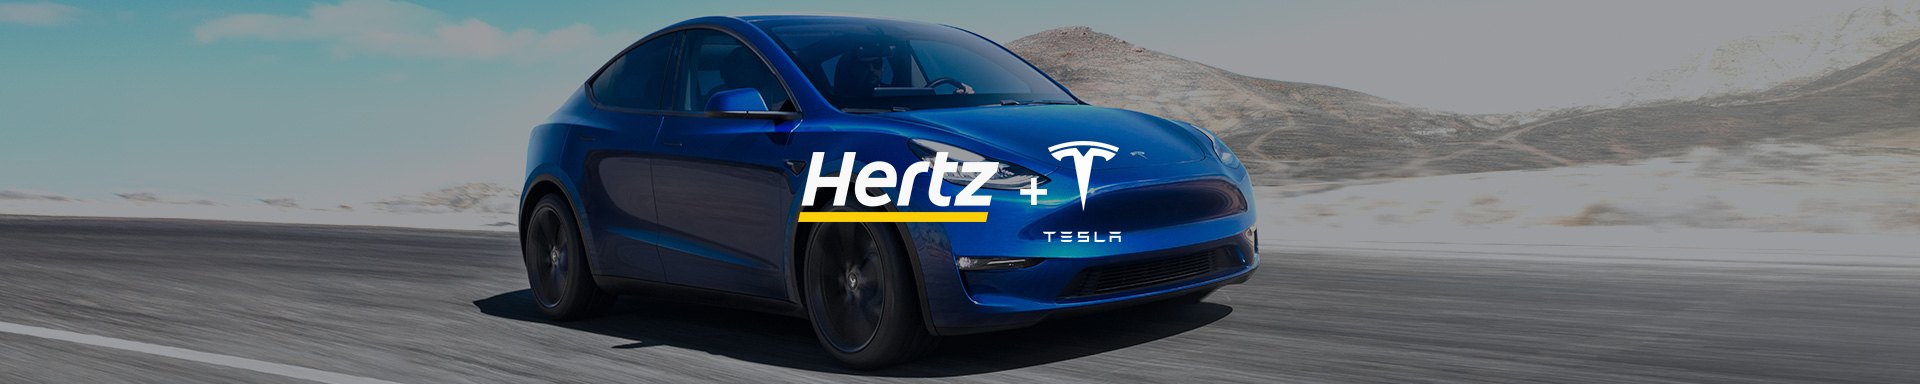 Will the Hertz-Tesla Deal Tempt Me to Rent an EV?